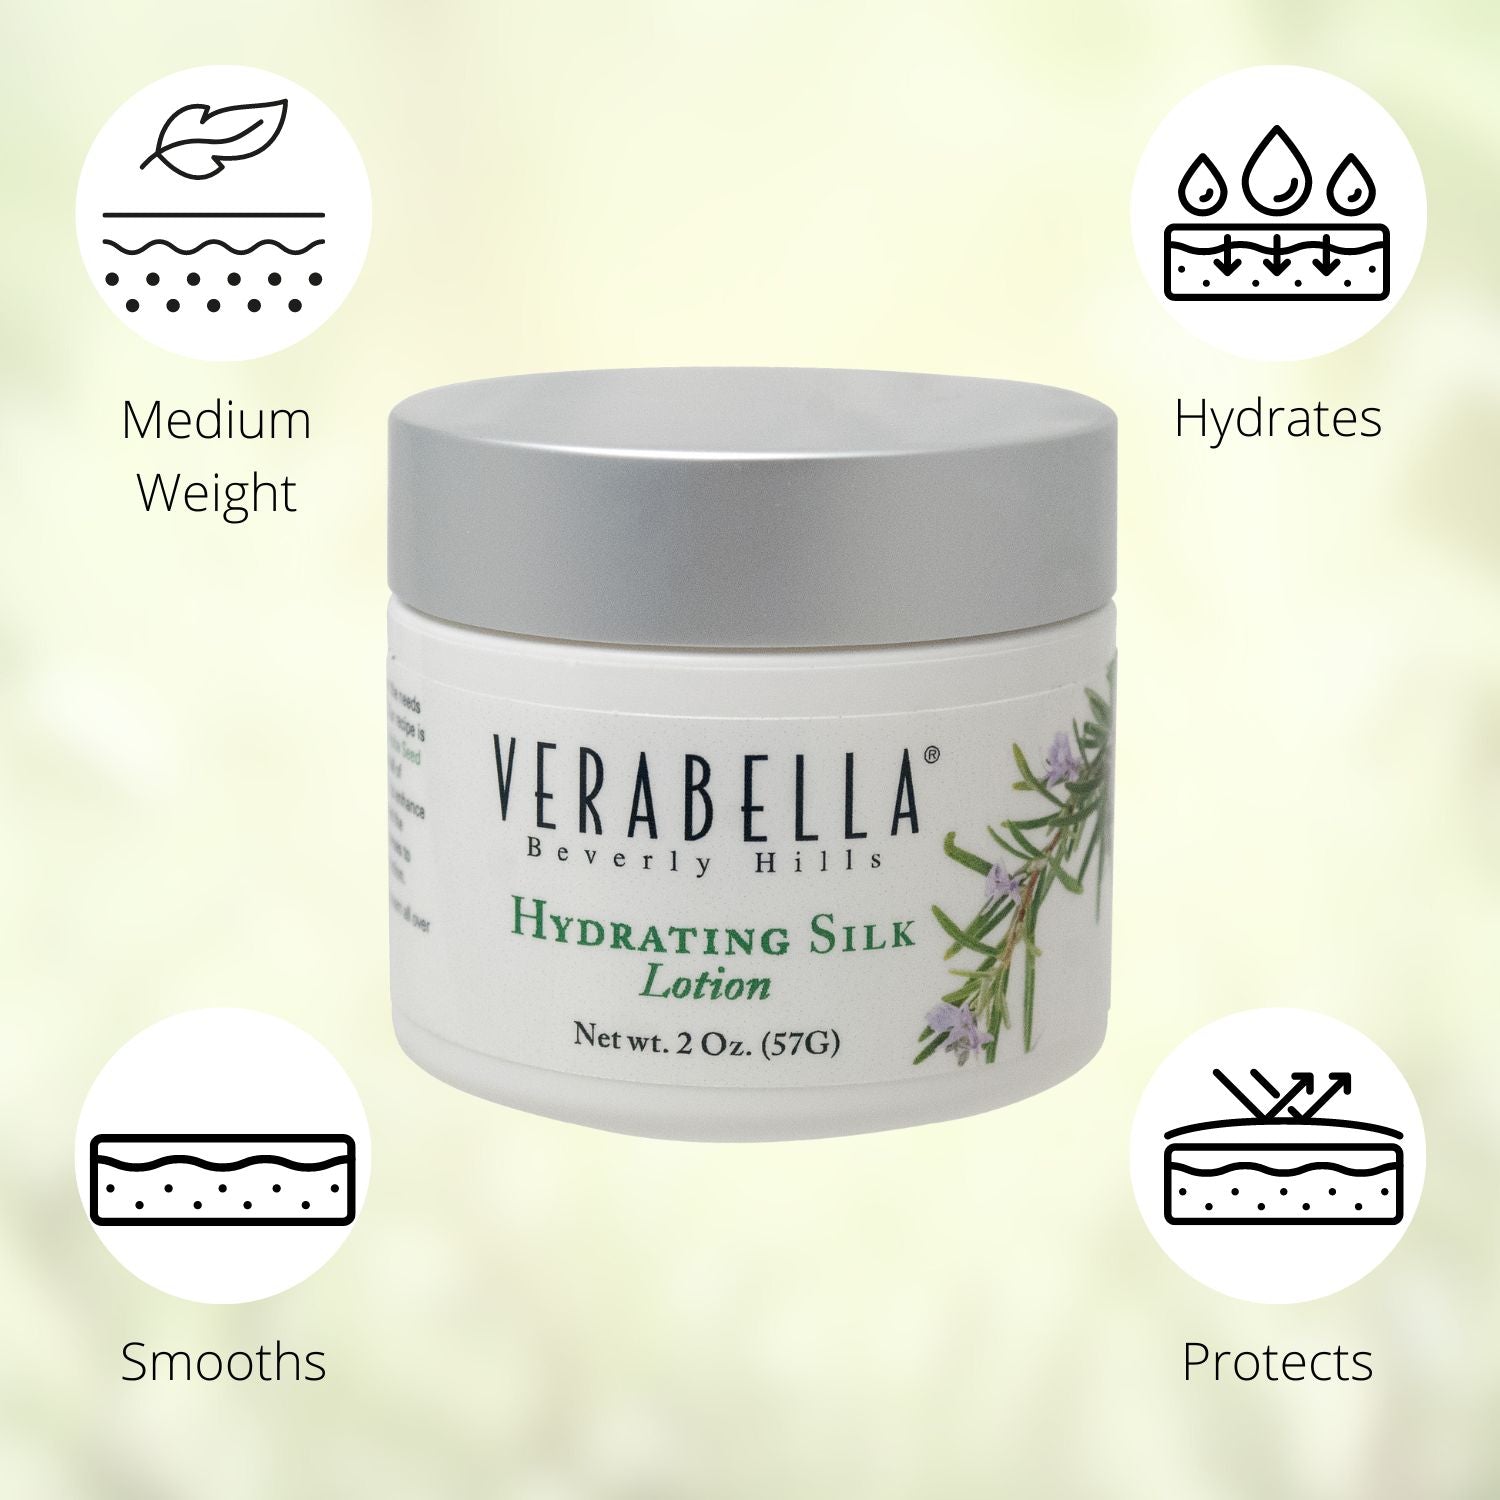 Verabella Hydrating Silk Lotion is a medium-weight moisturizer.